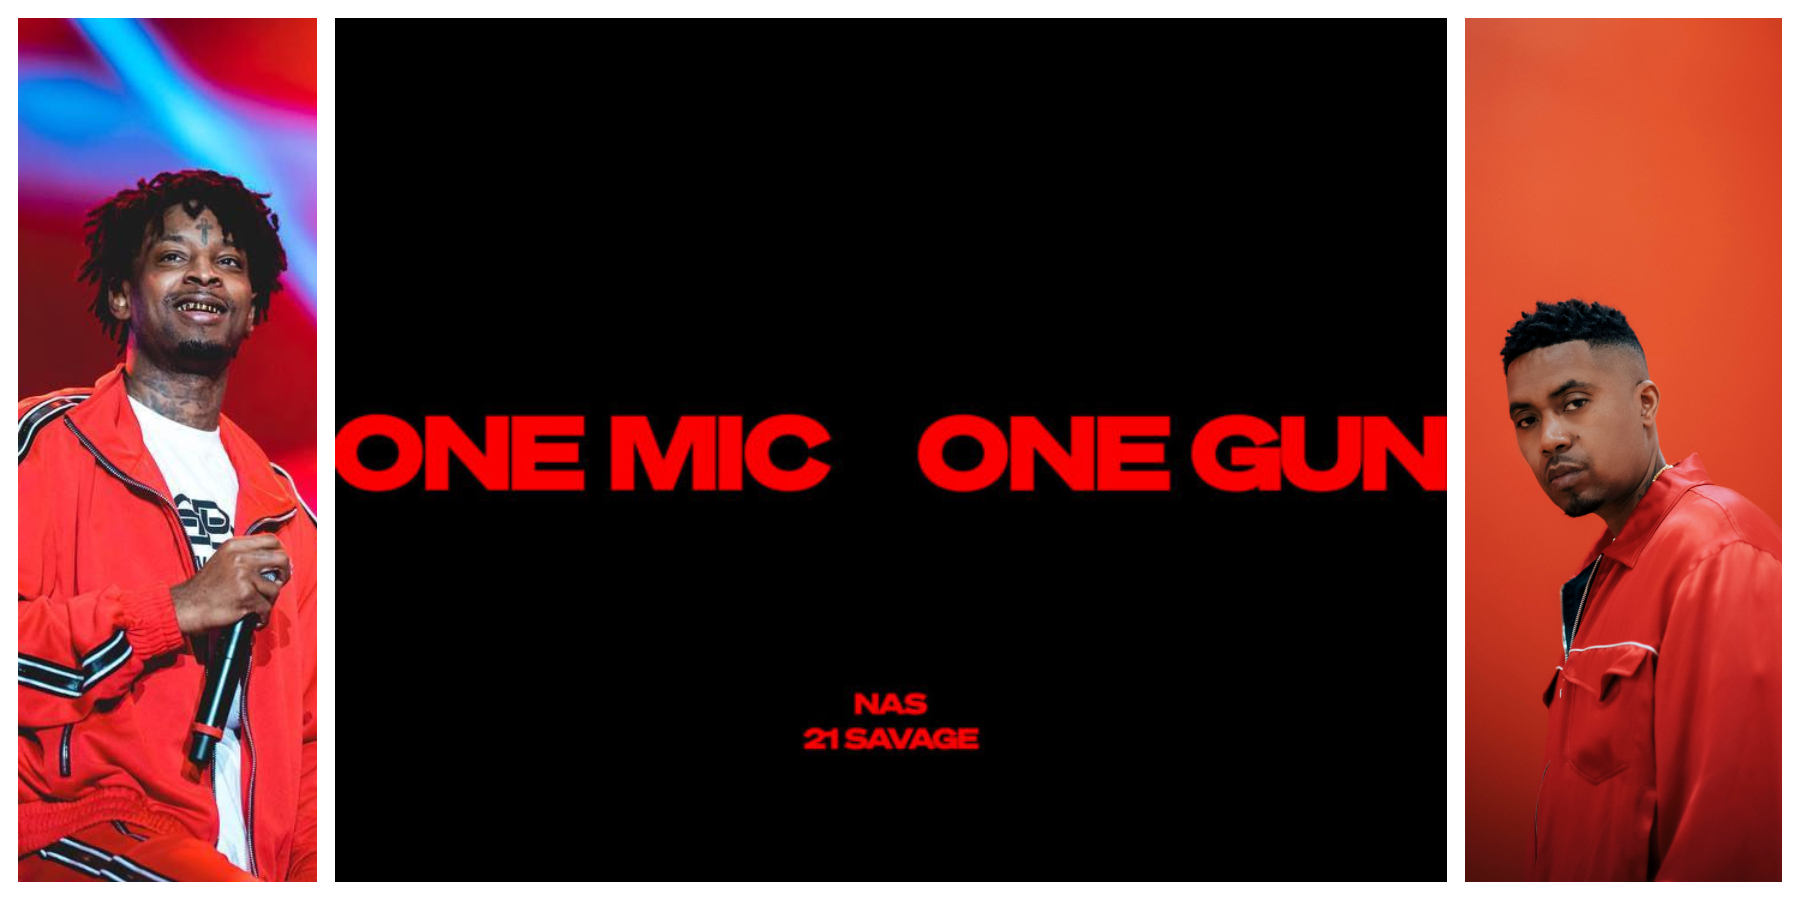 New Song: 21 Savage & Nas – ‘One Mic One Gun’